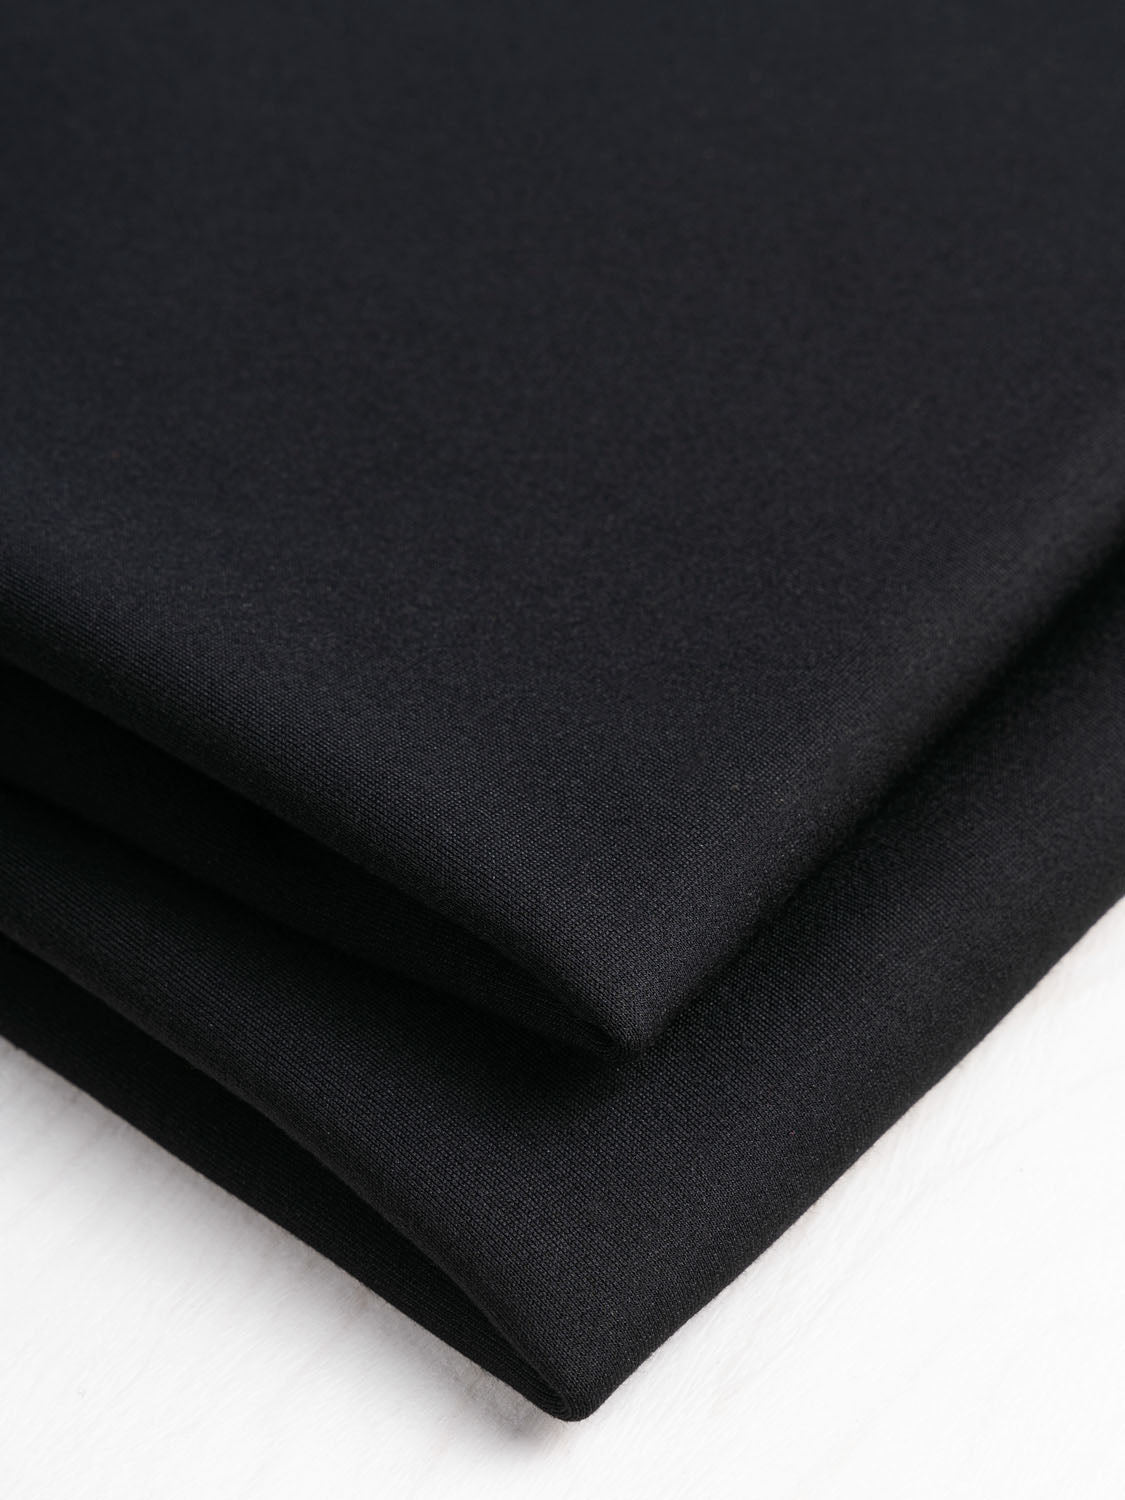 Buy Exclusive Dark Green Solid Metallic Knitted Lycra Fabric